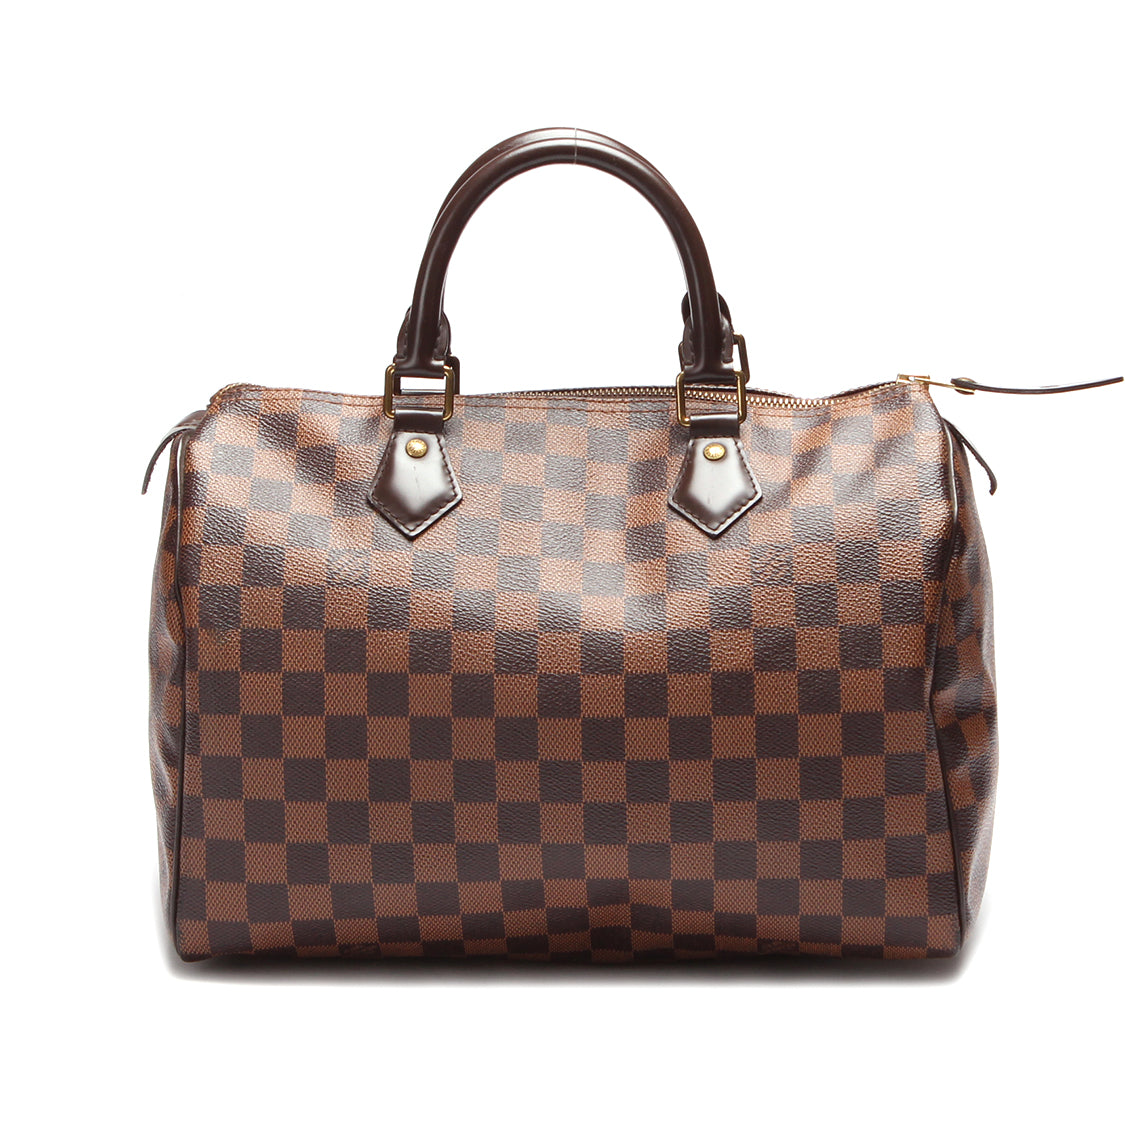 Louis Vuitton Damier Ebene Speedy 30 Canvas Handbag in Excellent condition